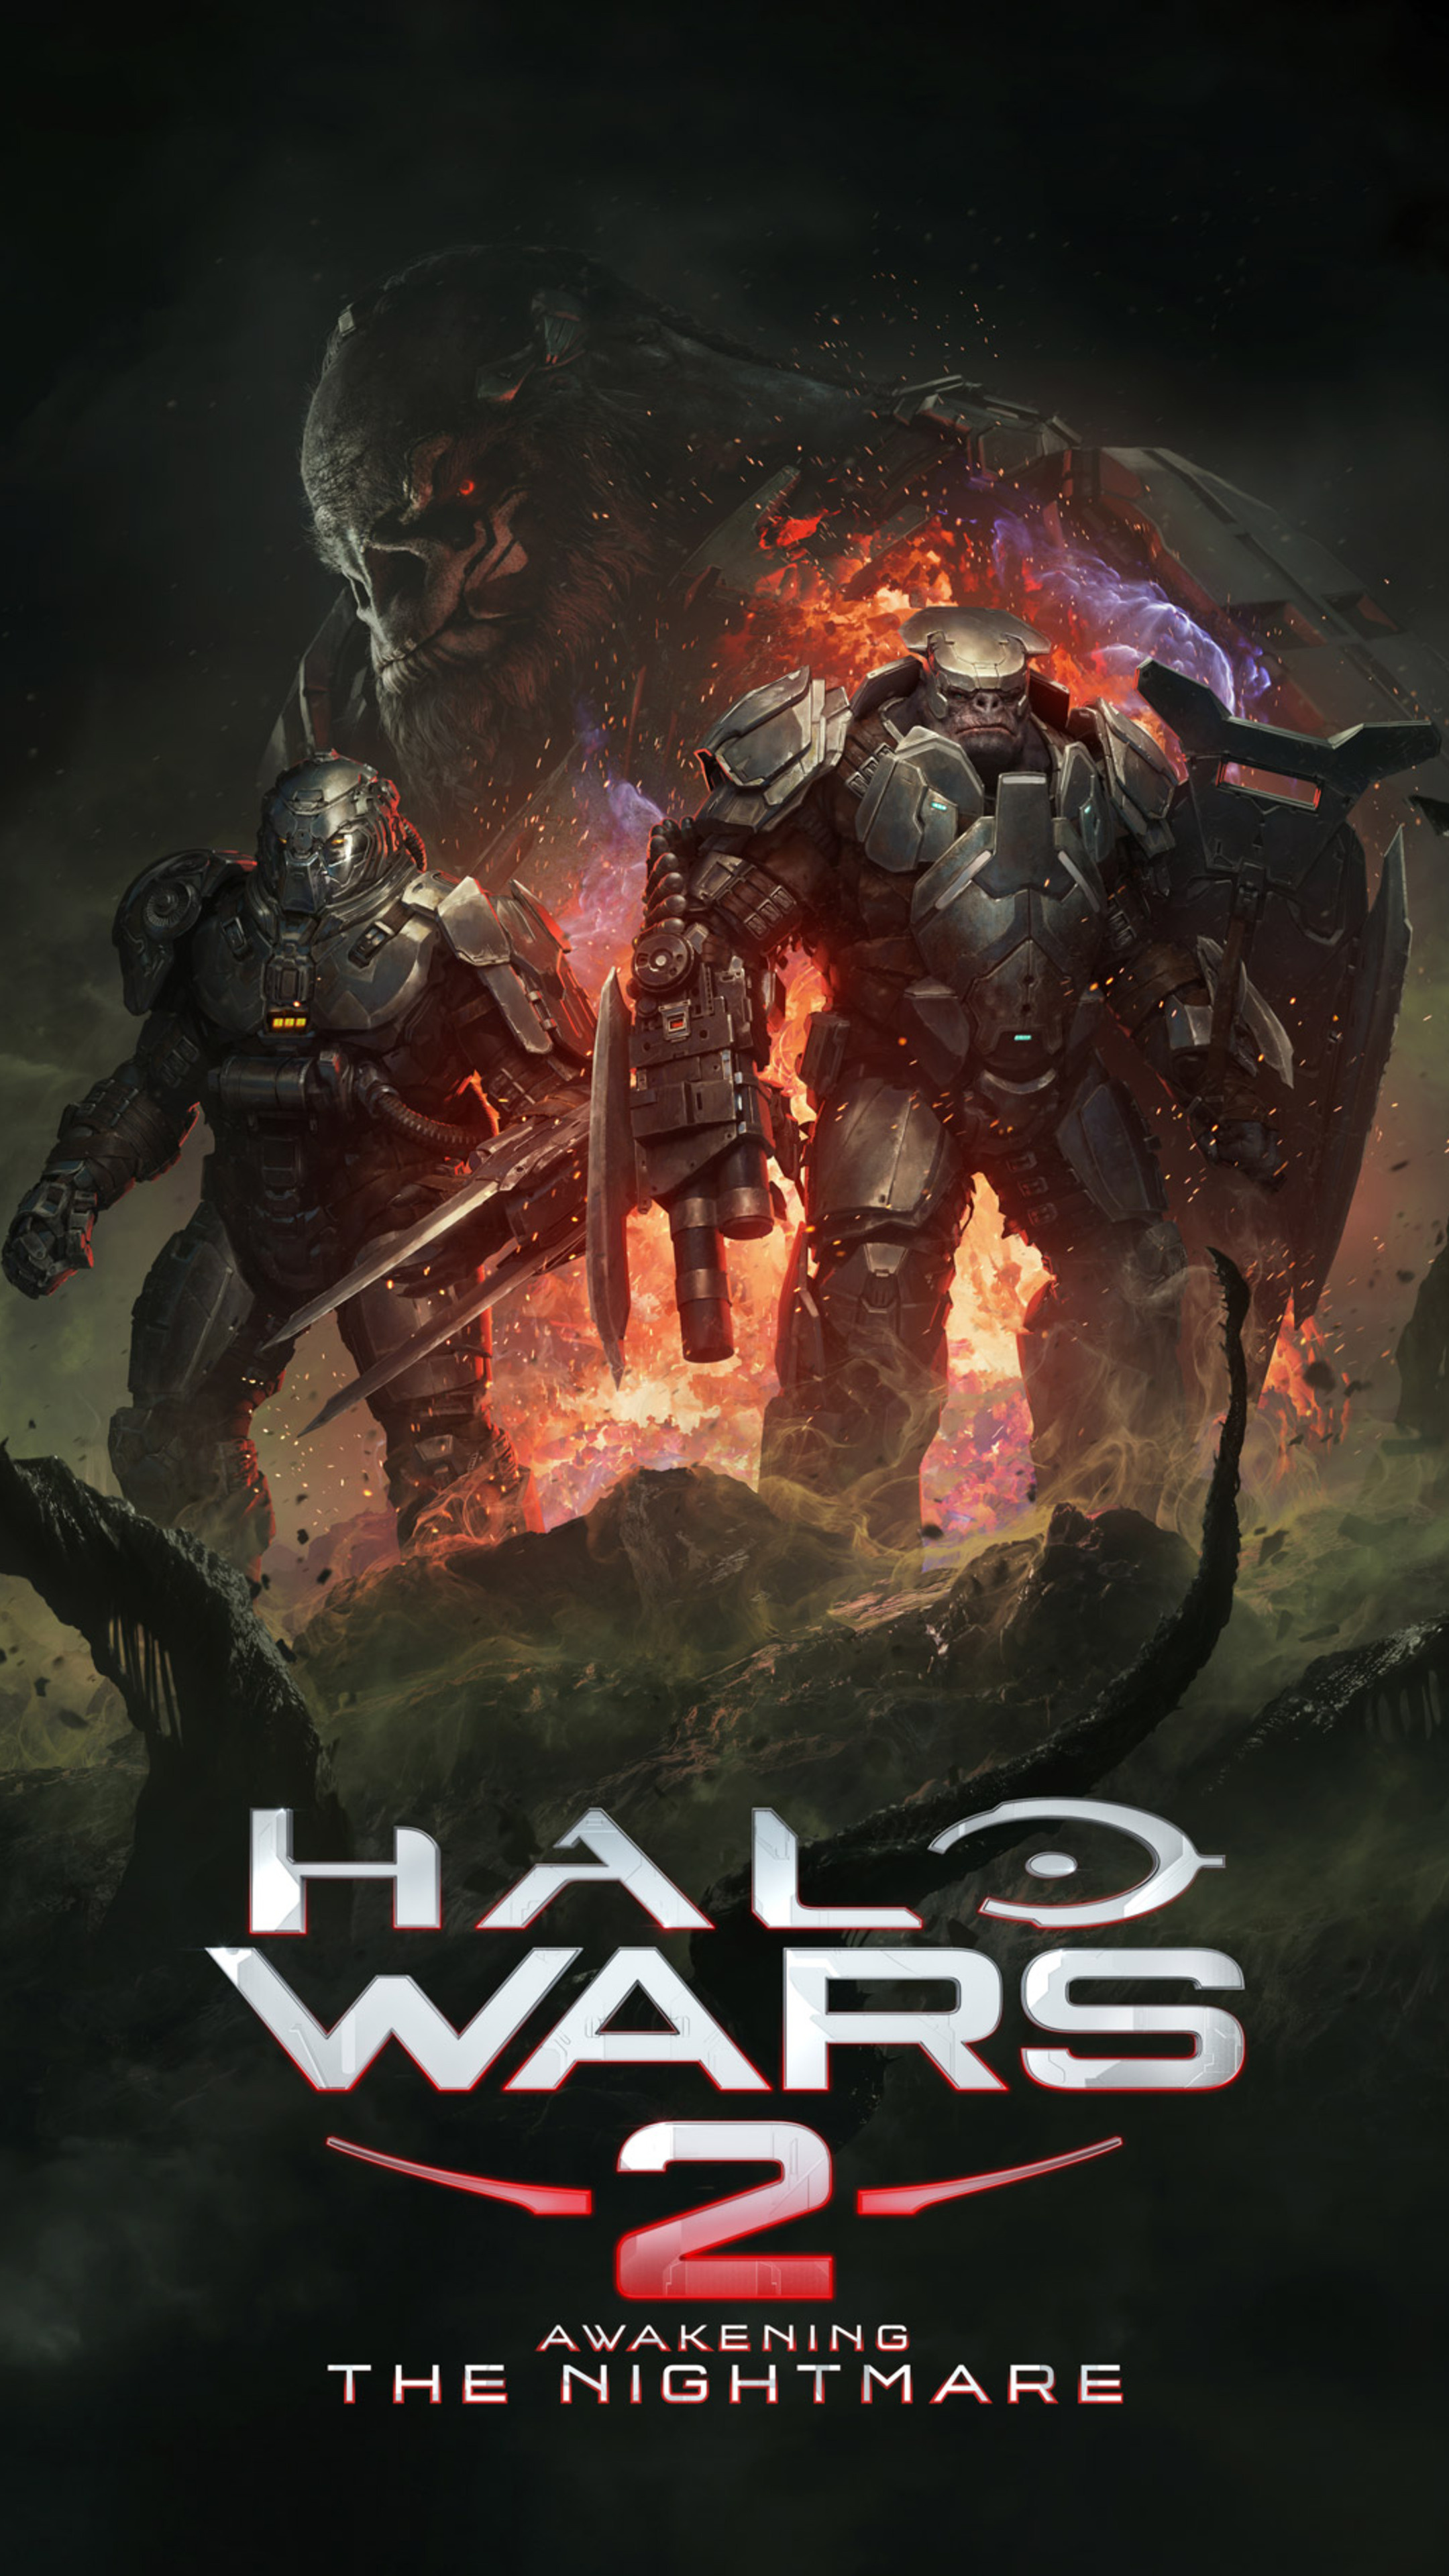 Halo Wars 2, Awakening the nightmare, Sony Xperia wallpapers, HD 4k resolution, 2160x3840 4K Handy